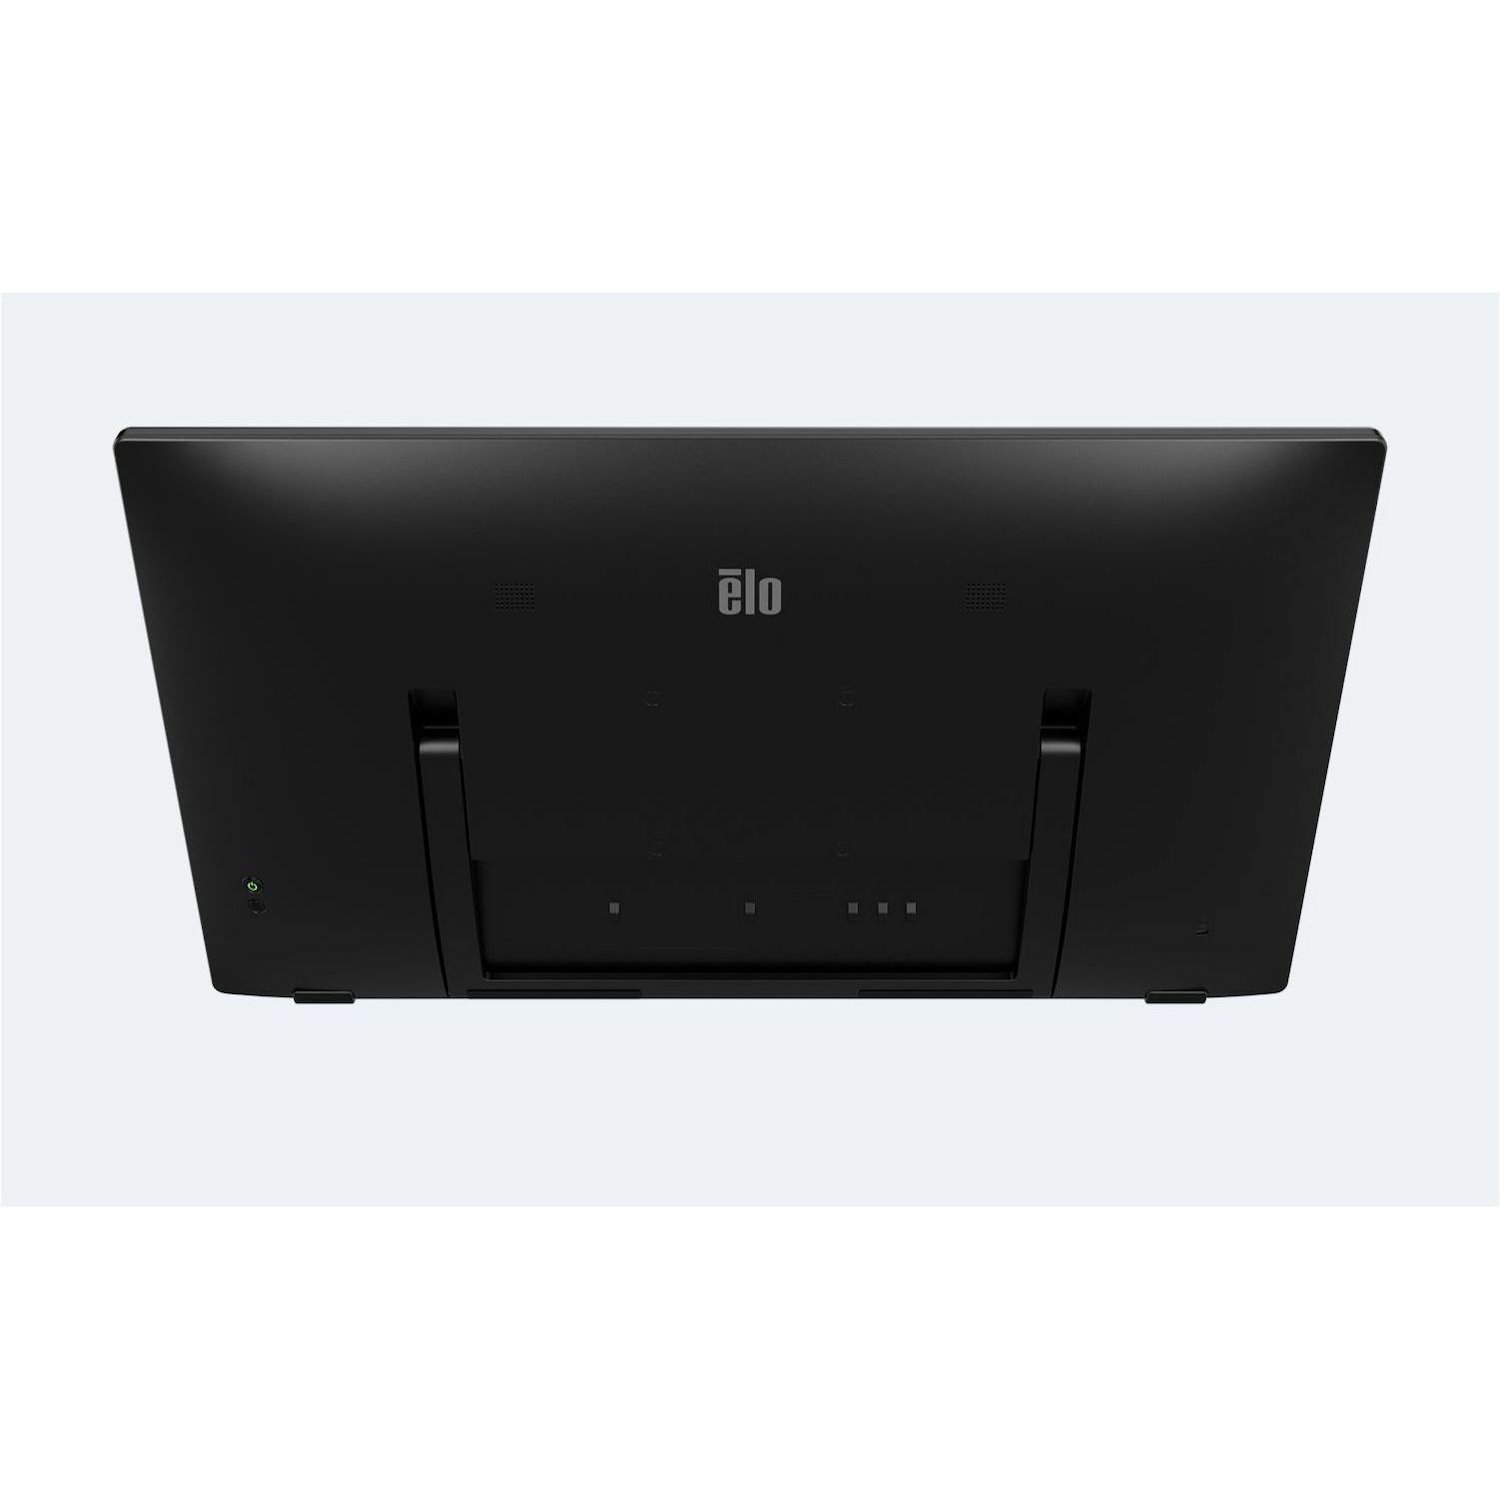 Elo 27" Class LED Touchscreen Monitor - 16:9 - 14 ms